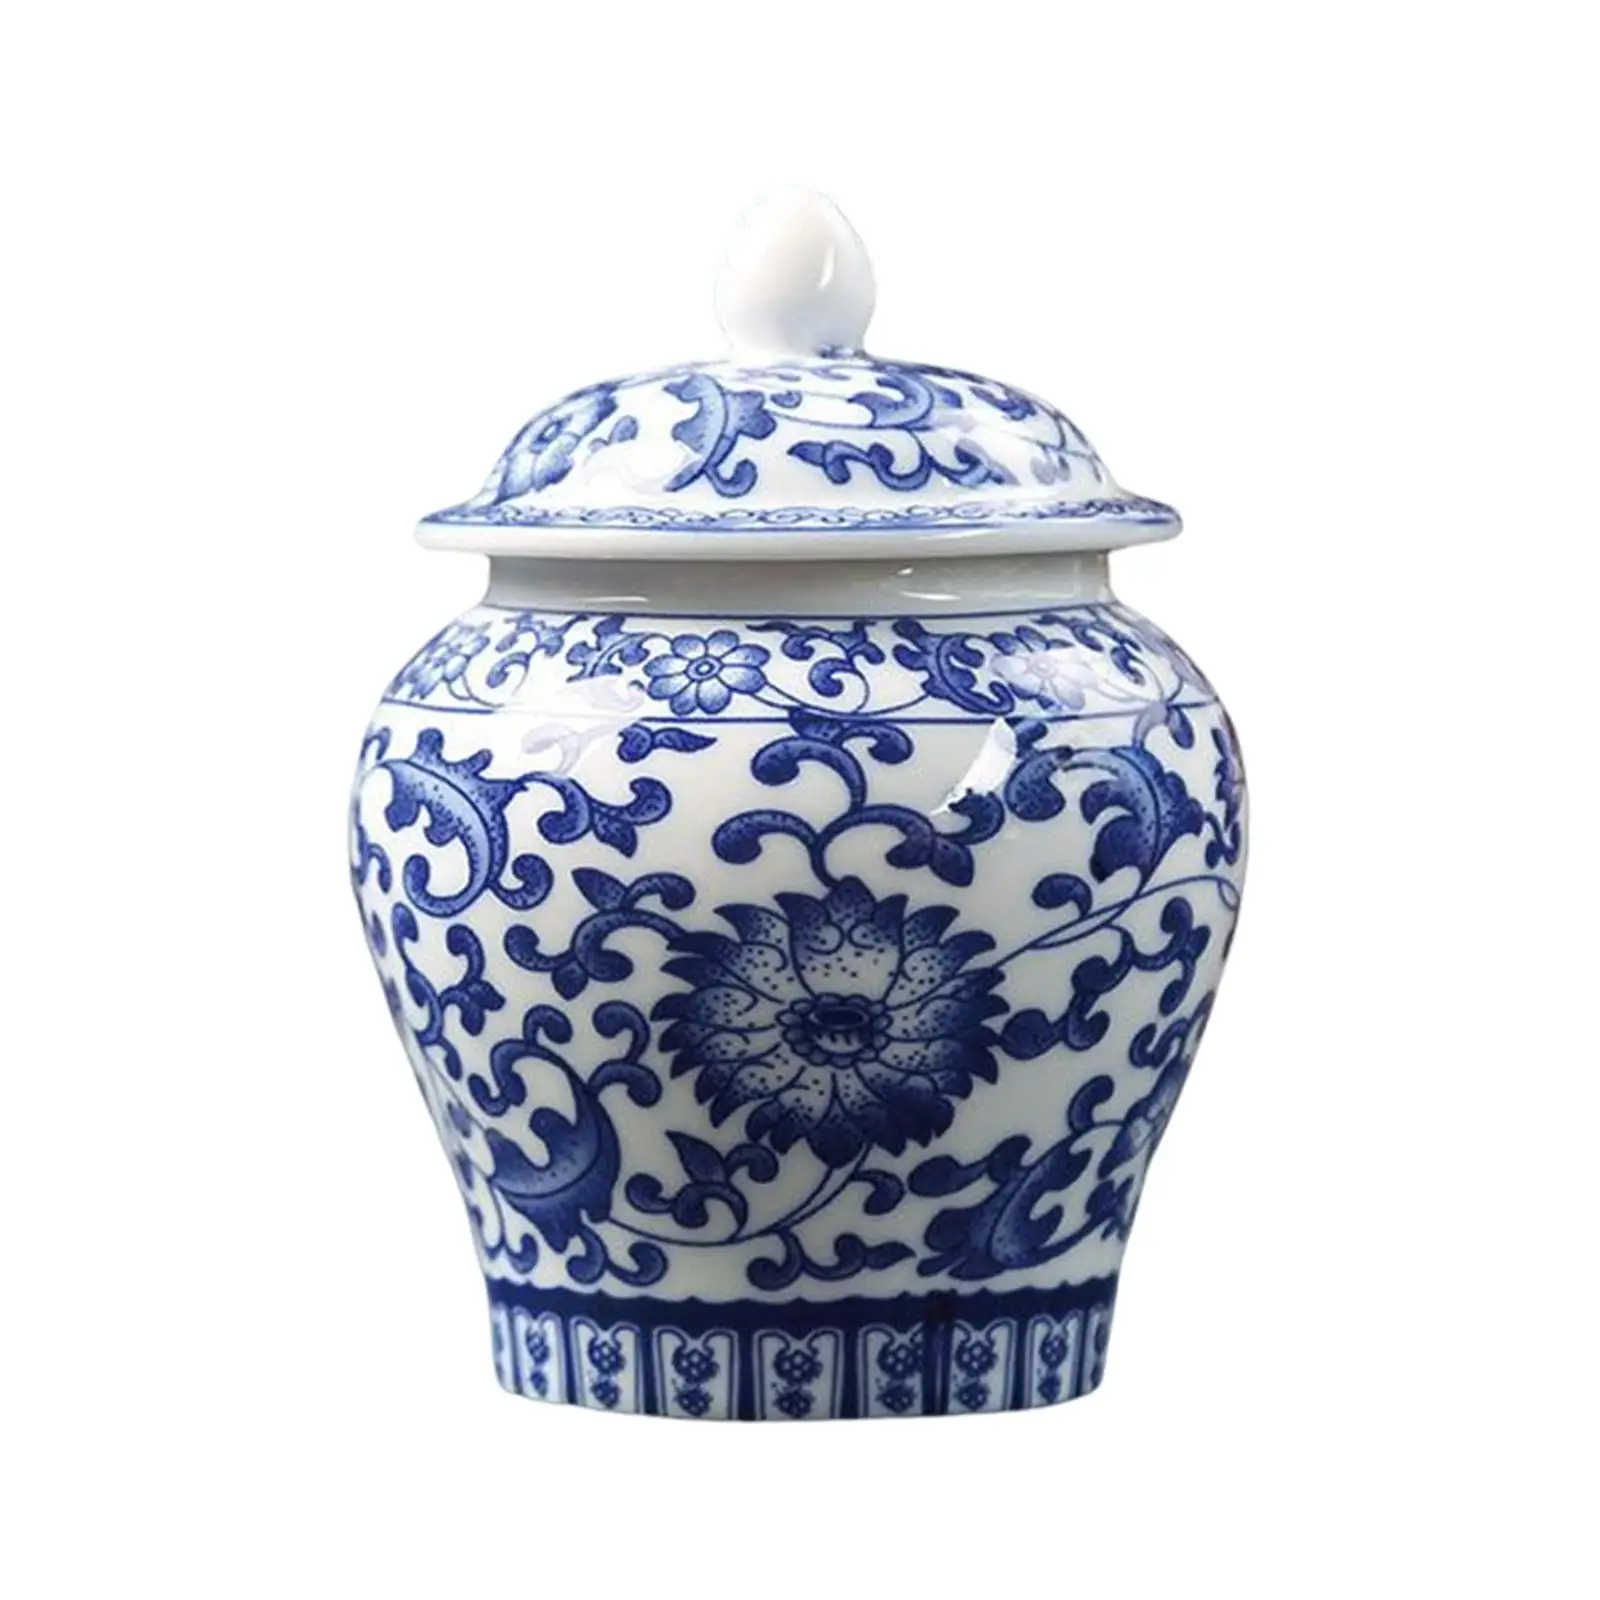 Chinese Blue and White Ceramic Glazed Ginger Jar Tea Storage Jar with Lid Centerpiece Elegant Delicate Floral Arrangement